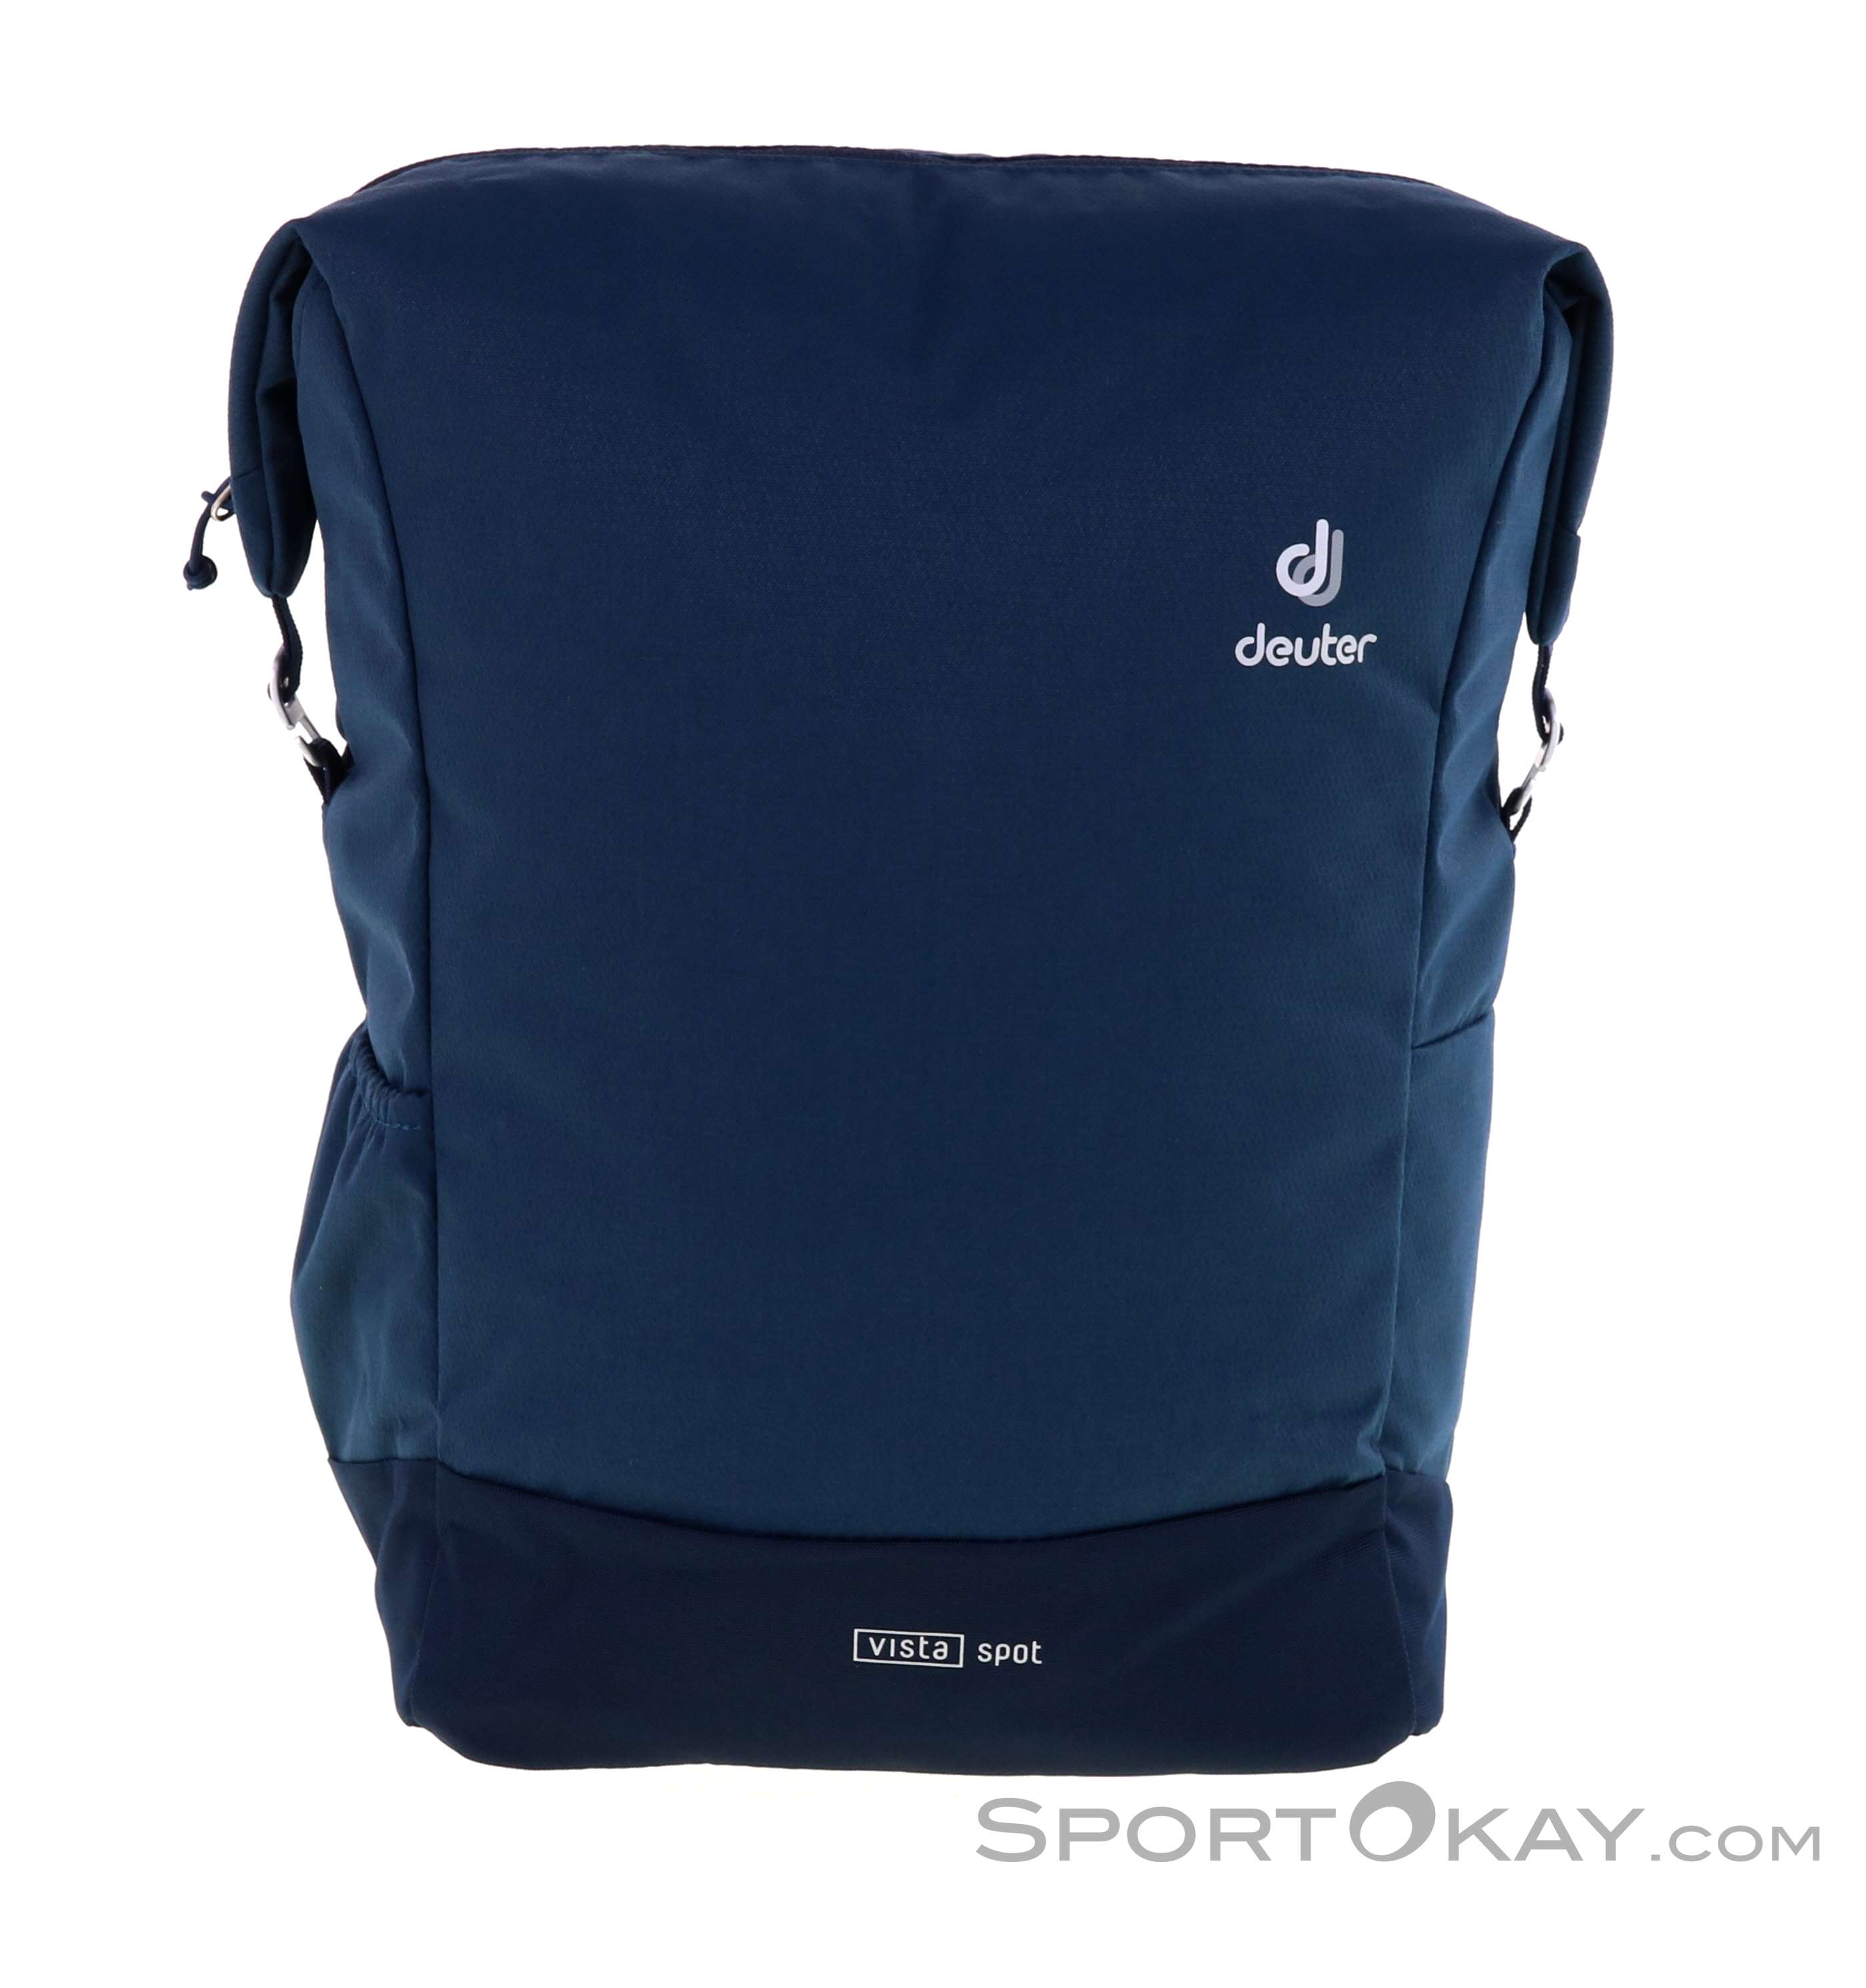 Deuter Vista Spot 18l Backpack - Bags - Leisure - Fashion - All